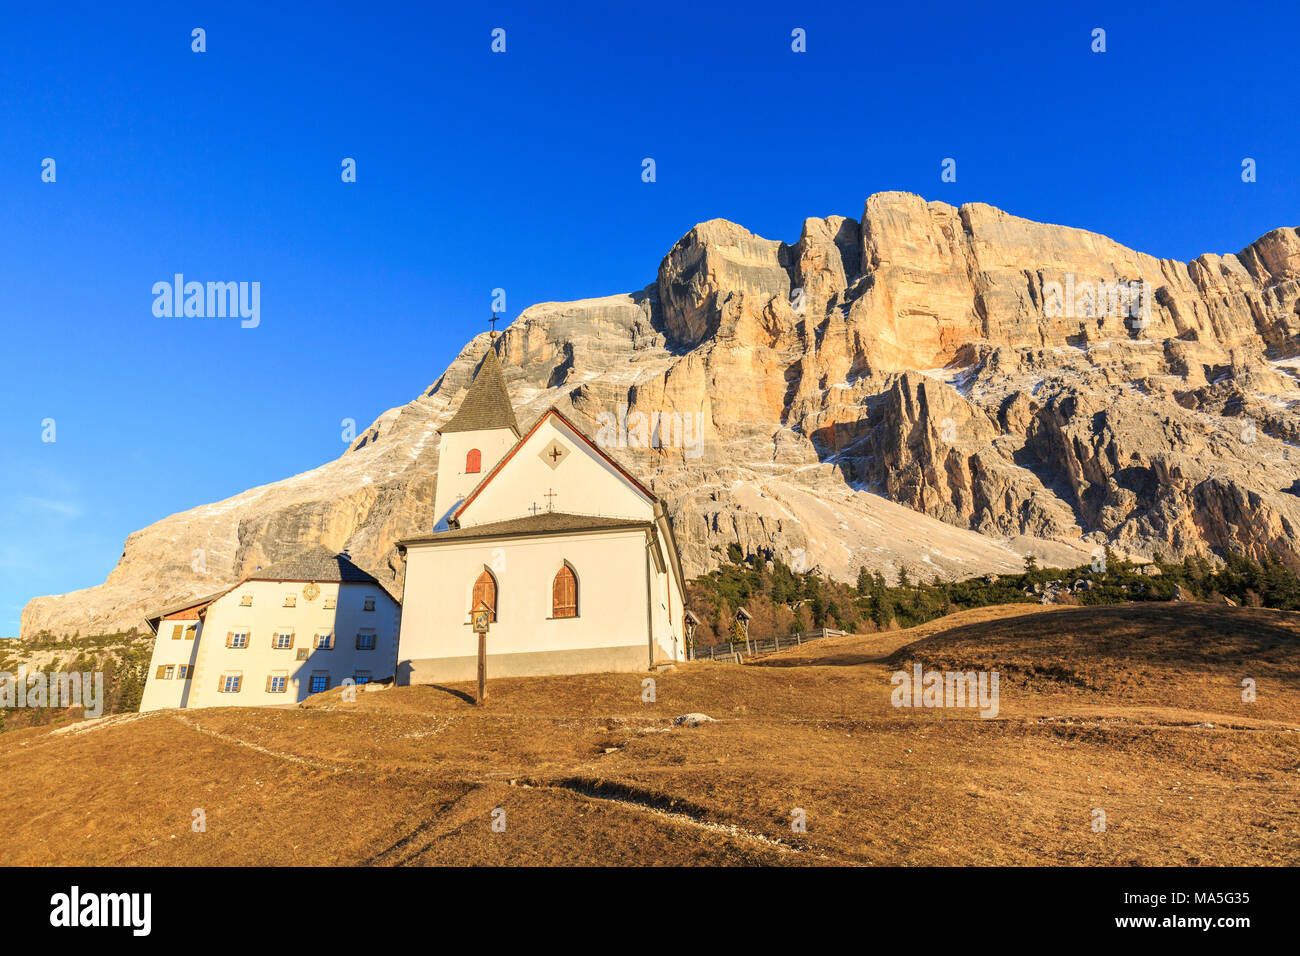 Italy, Trentino Alto Adige, Sudtirol, the church al Sas dla Crusc, in the background Sas dla Crusc mountain Stock Photo